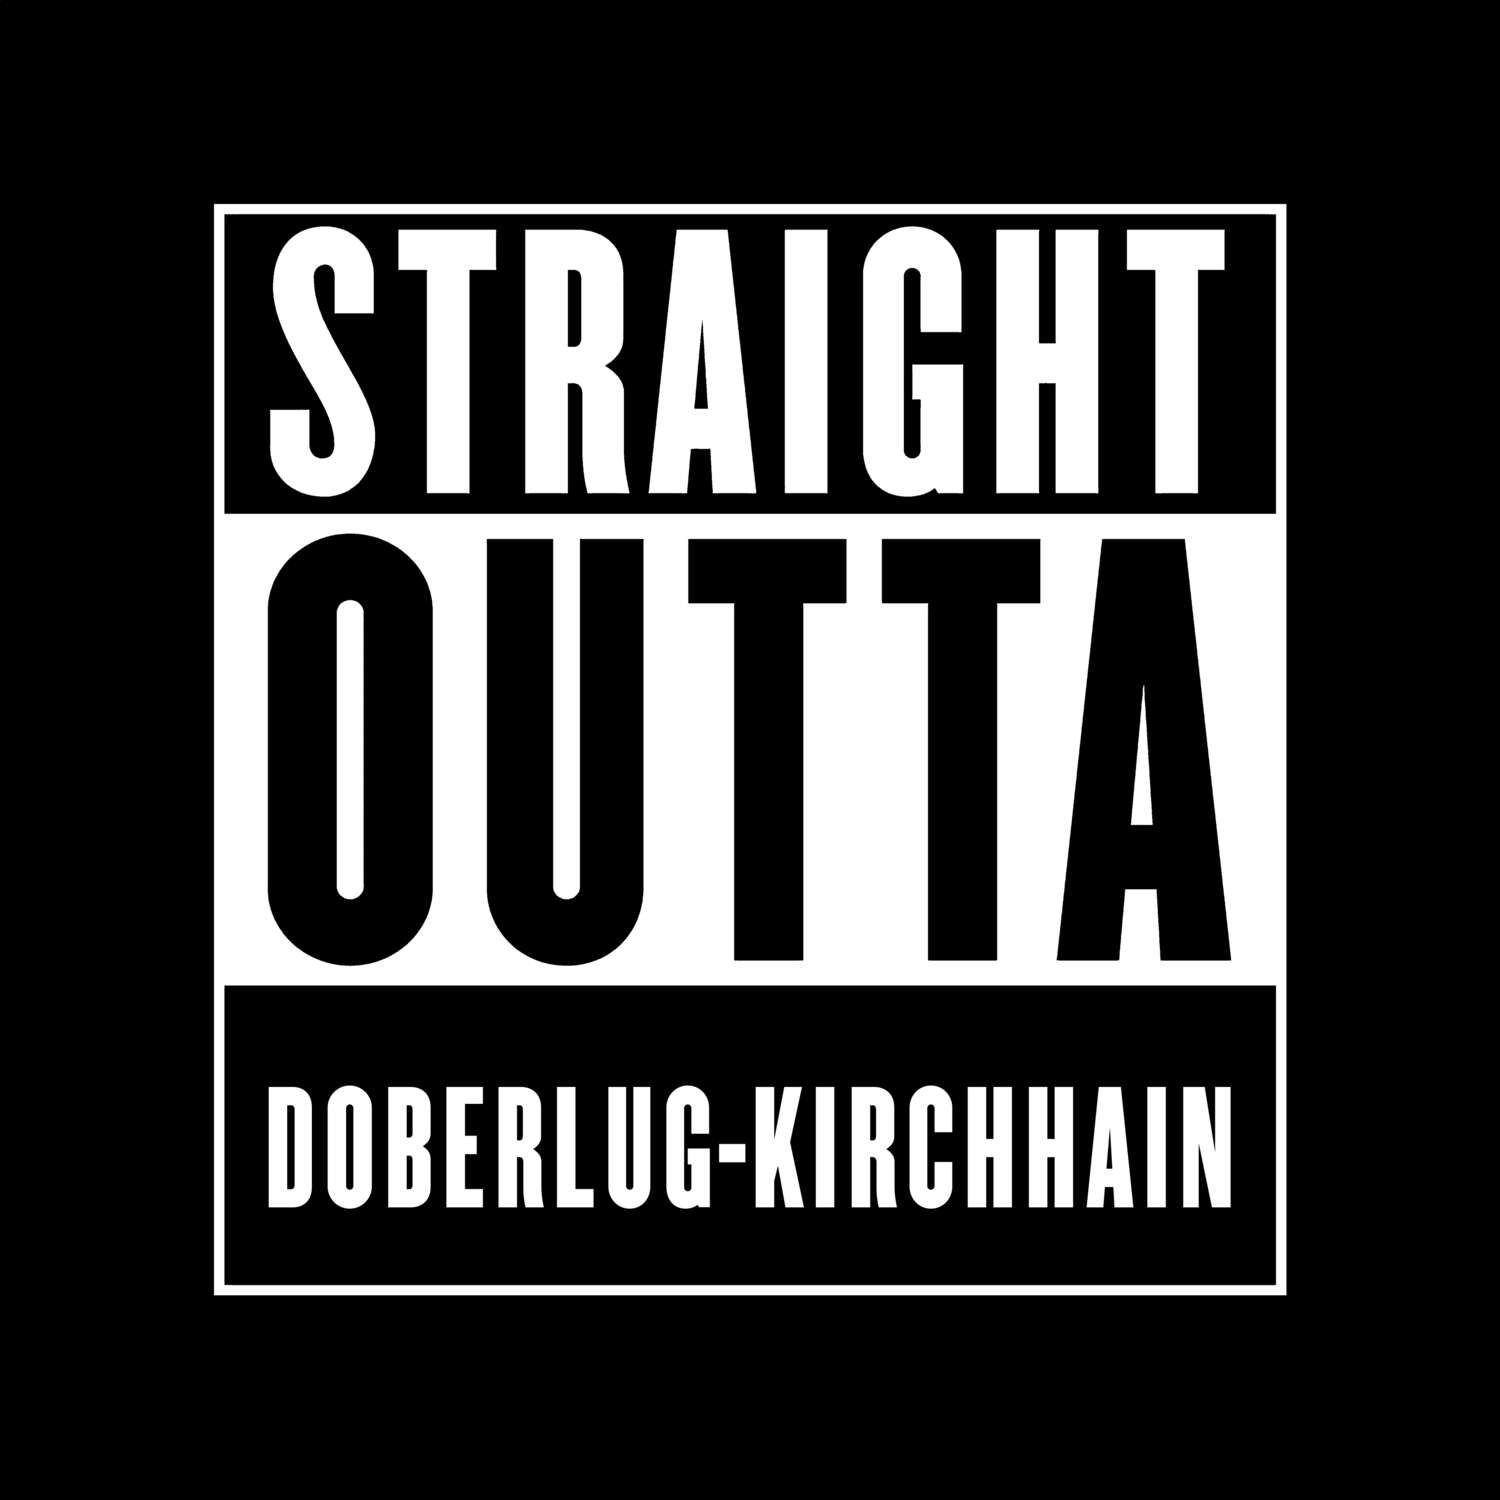 Doberlug-Kirchhain T-Shirt »Straight Outta«